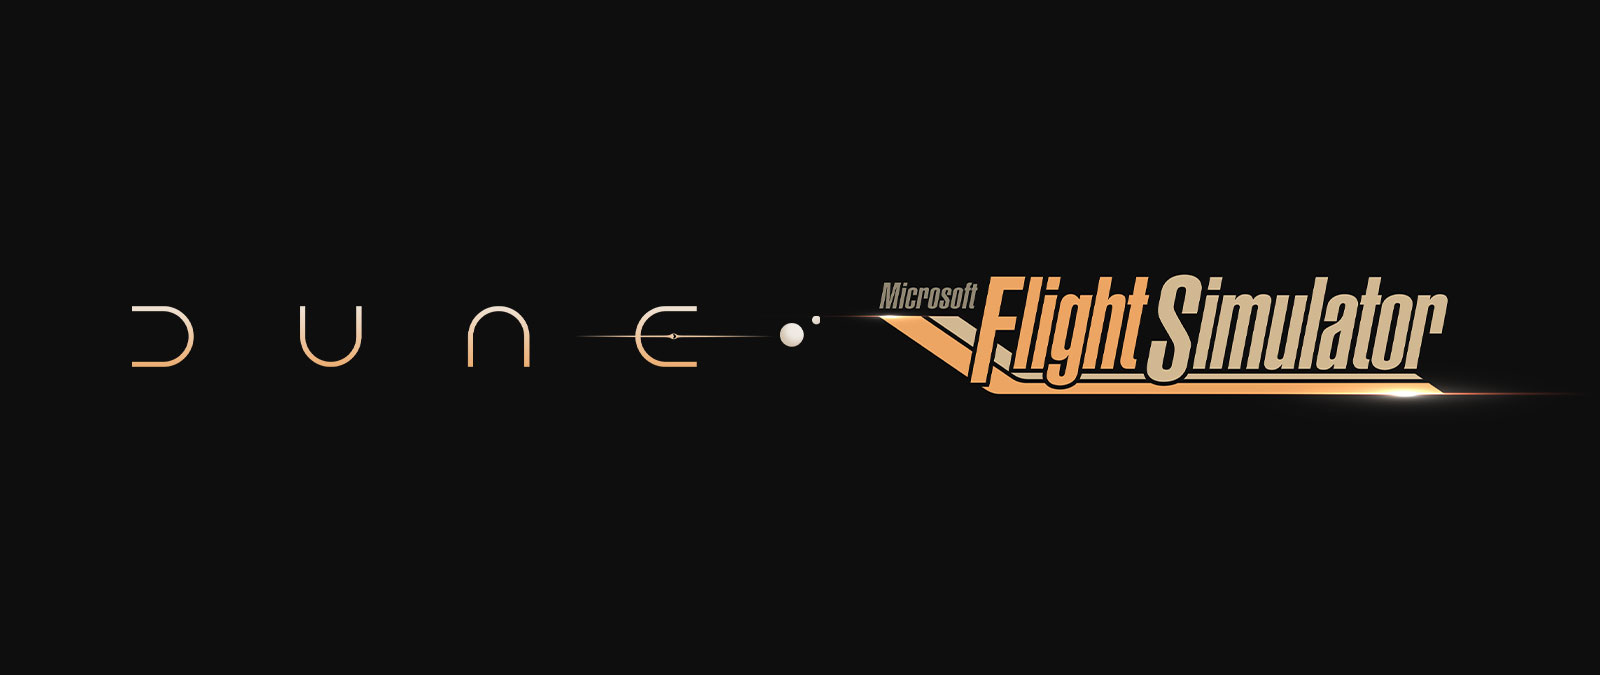 Dune-Filmlogo, Microsoft Flight Simulator-Logo